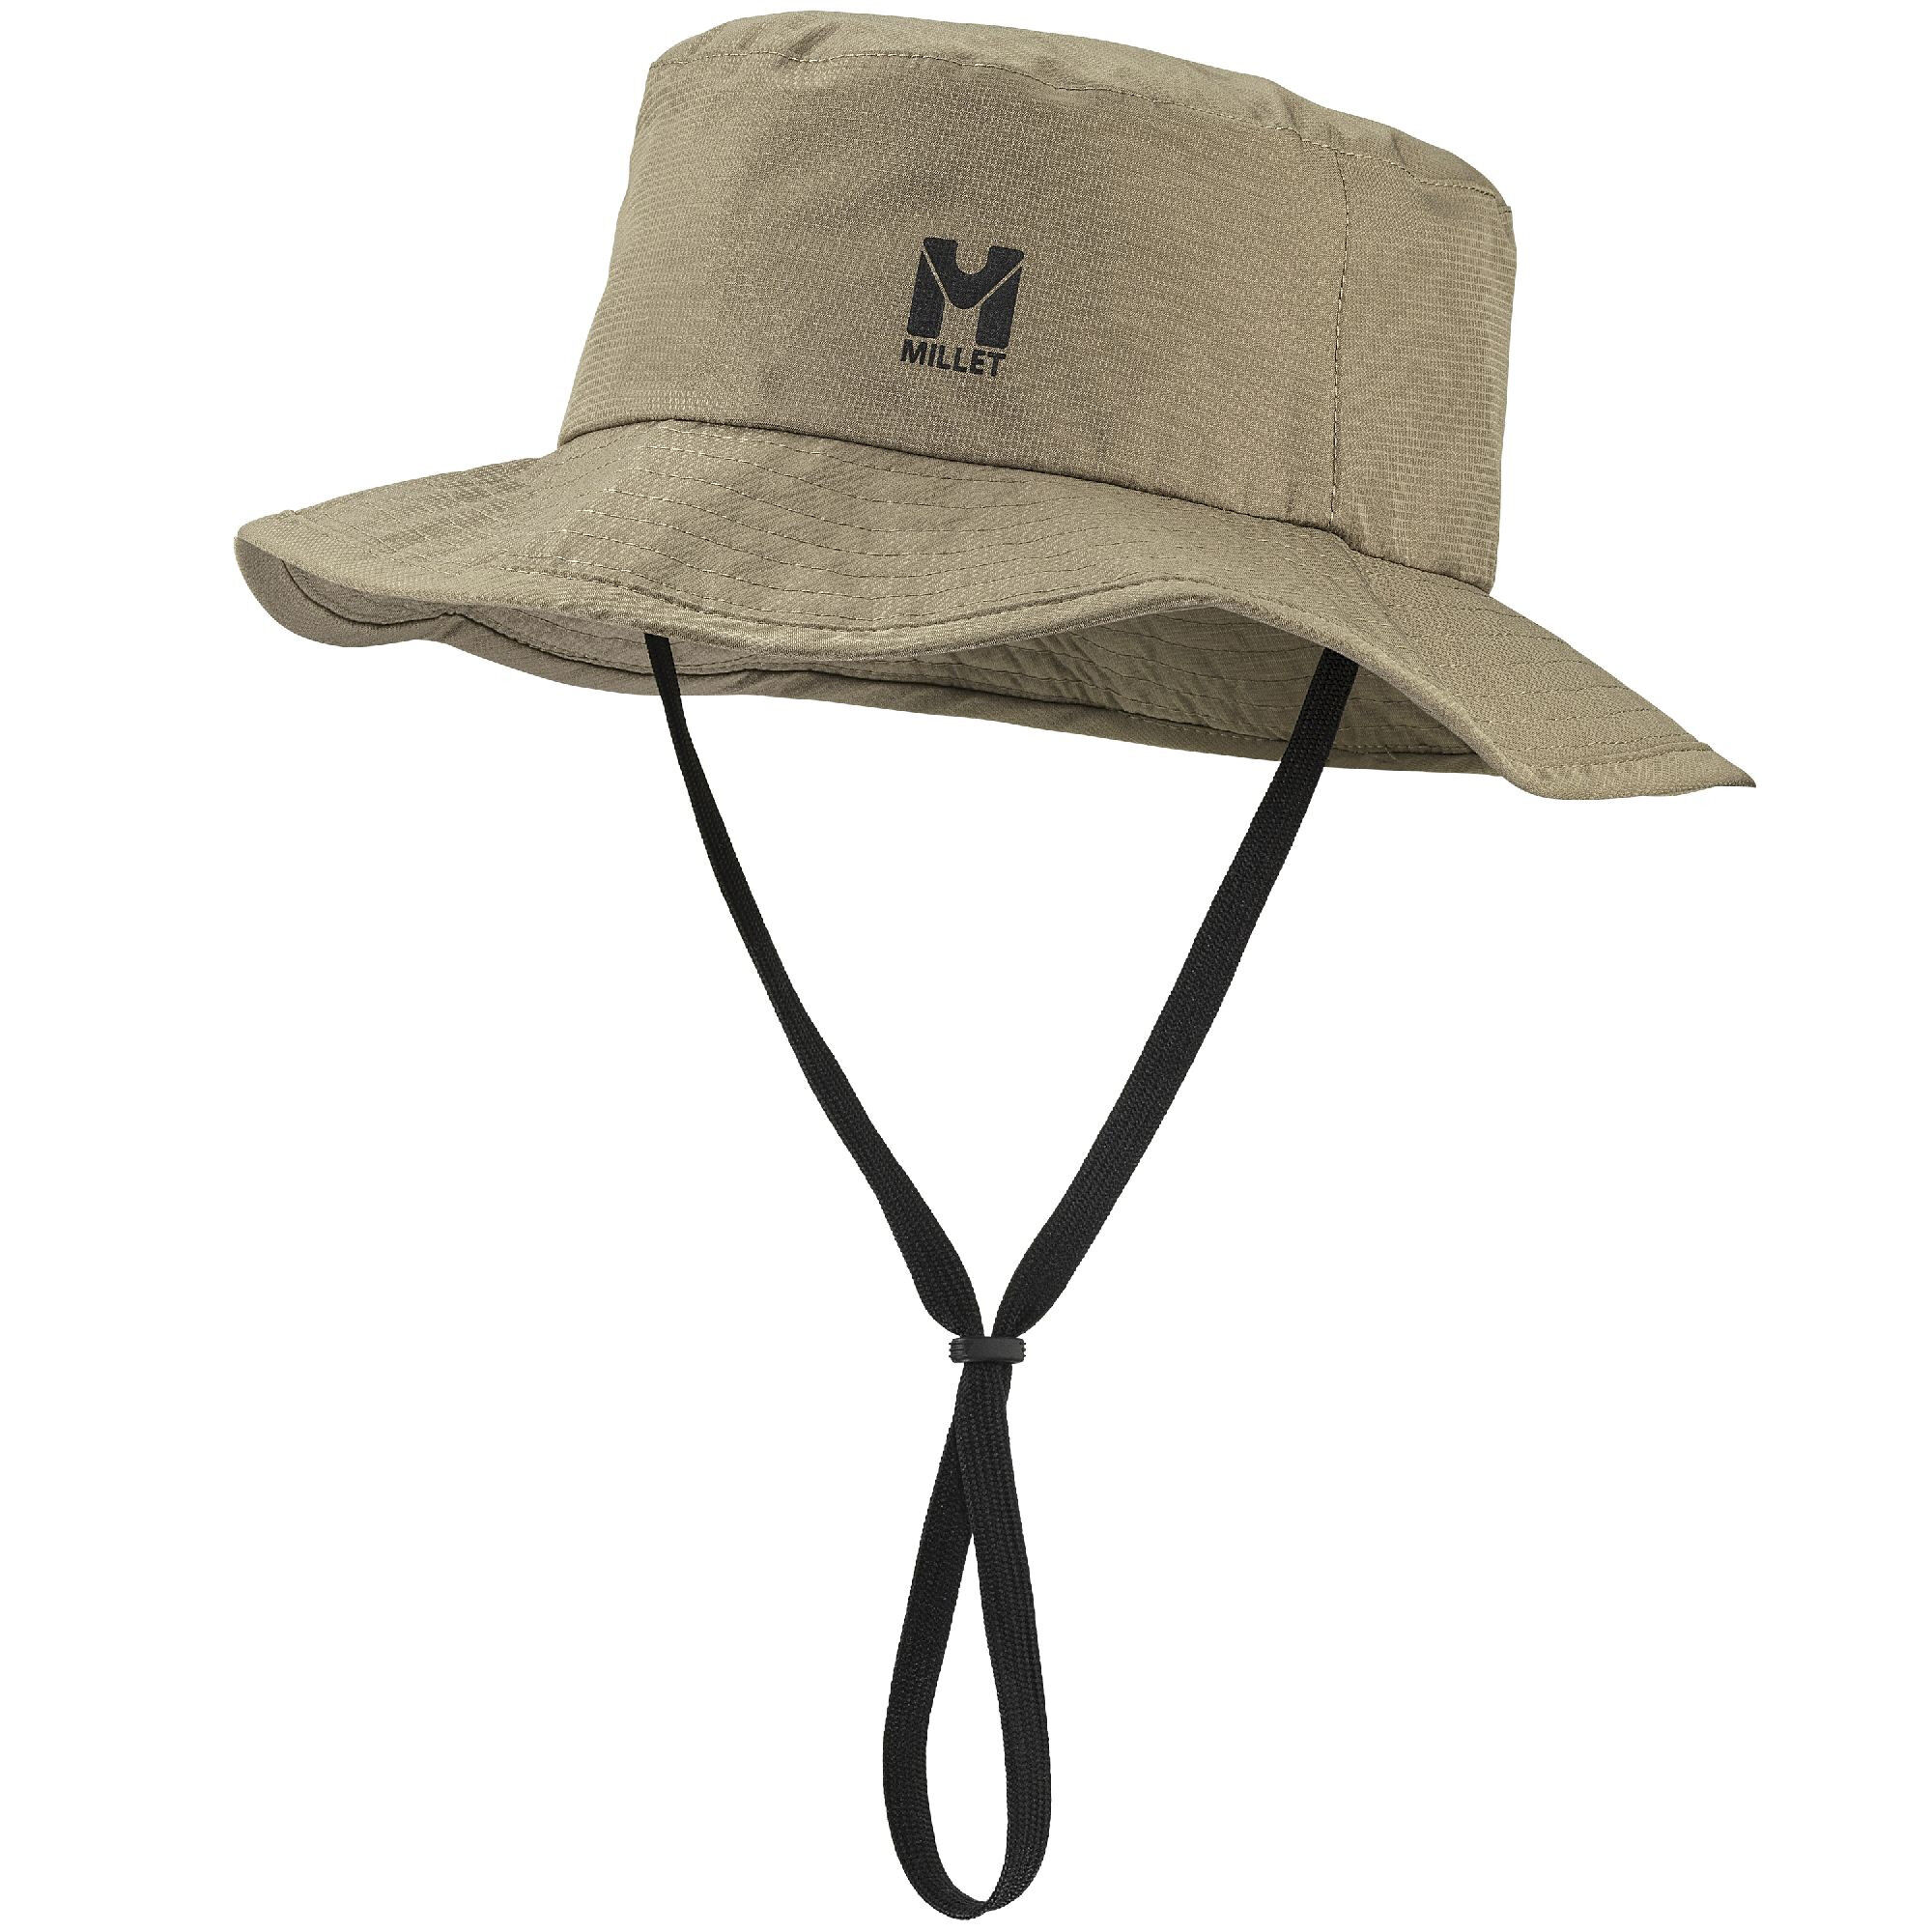 Millet Rainproof Hat - Hattu